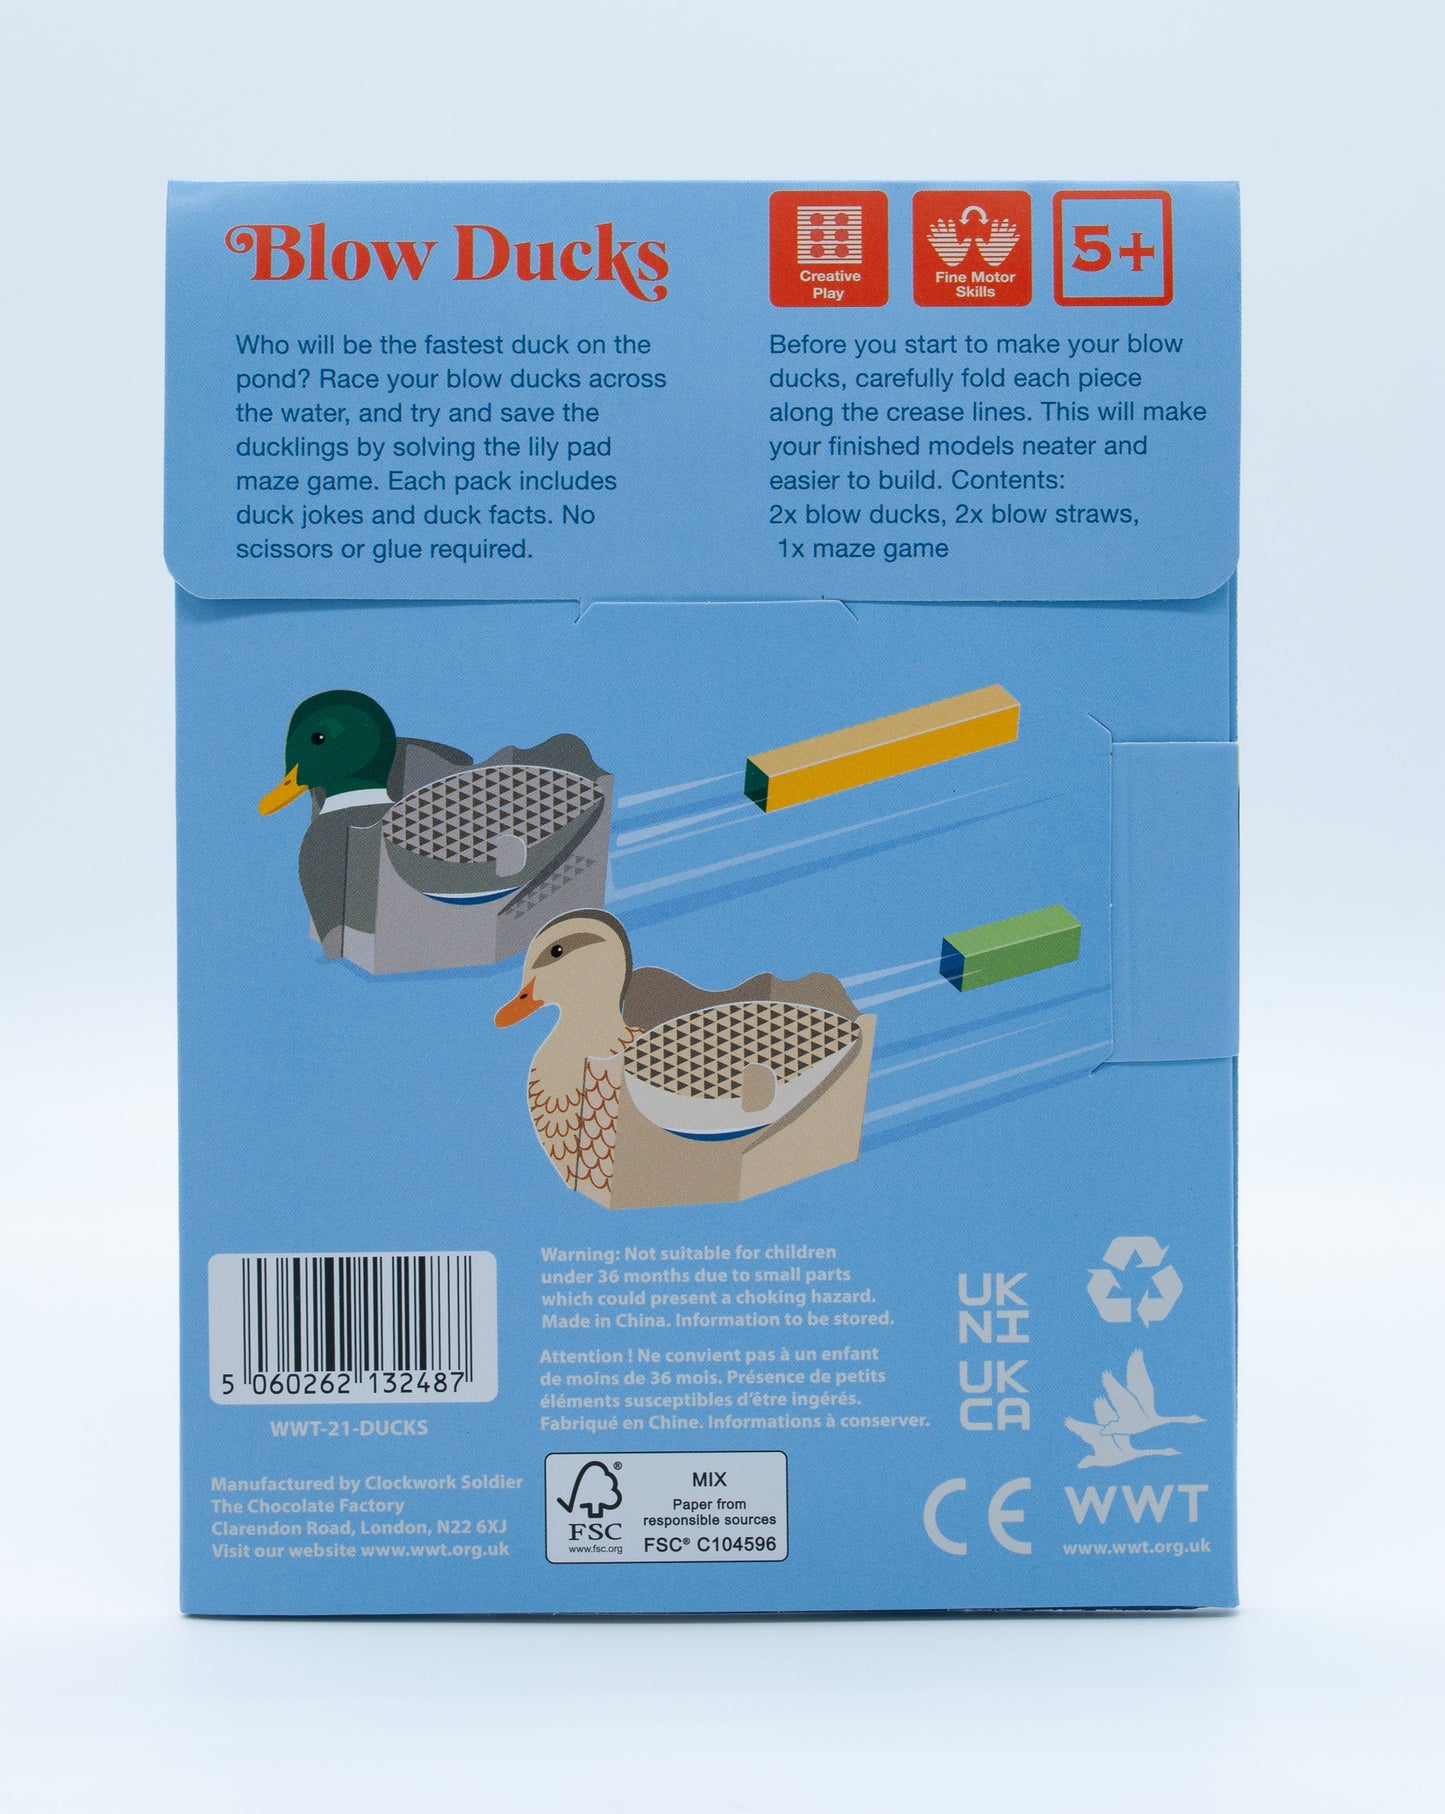 Clockwork Soldier-Create Your Own Blow Ducks